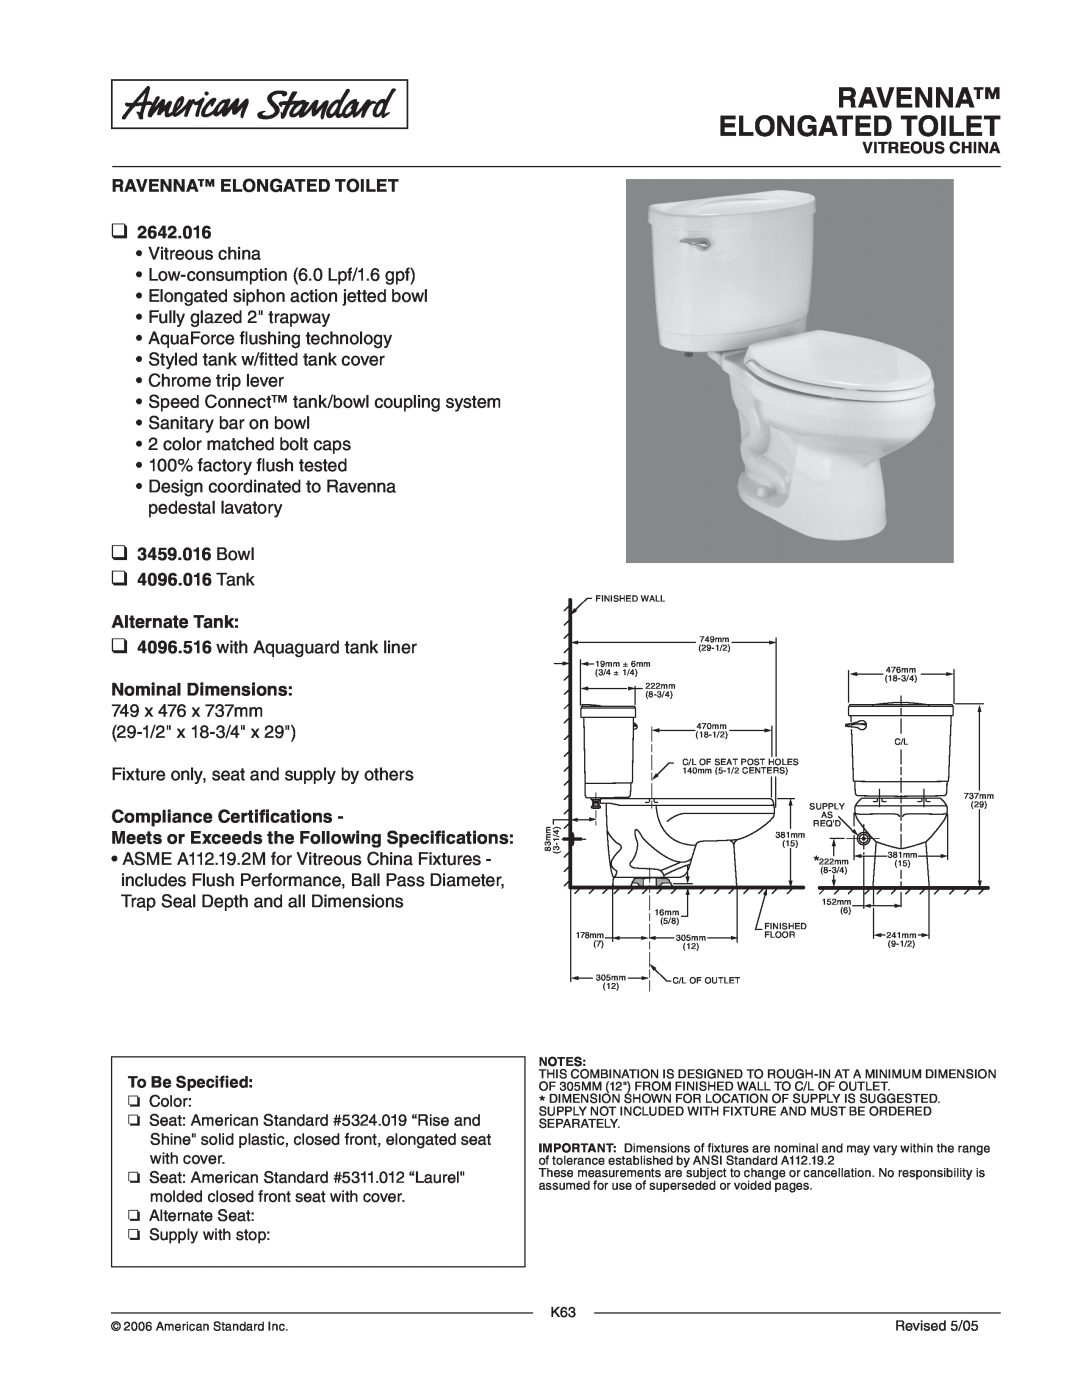 American Standard 4096.516 dimensions Ravenna Elongated Toilet, Bowl 4096.016 Tank, Alternate Tank, Nominal Dimensions 